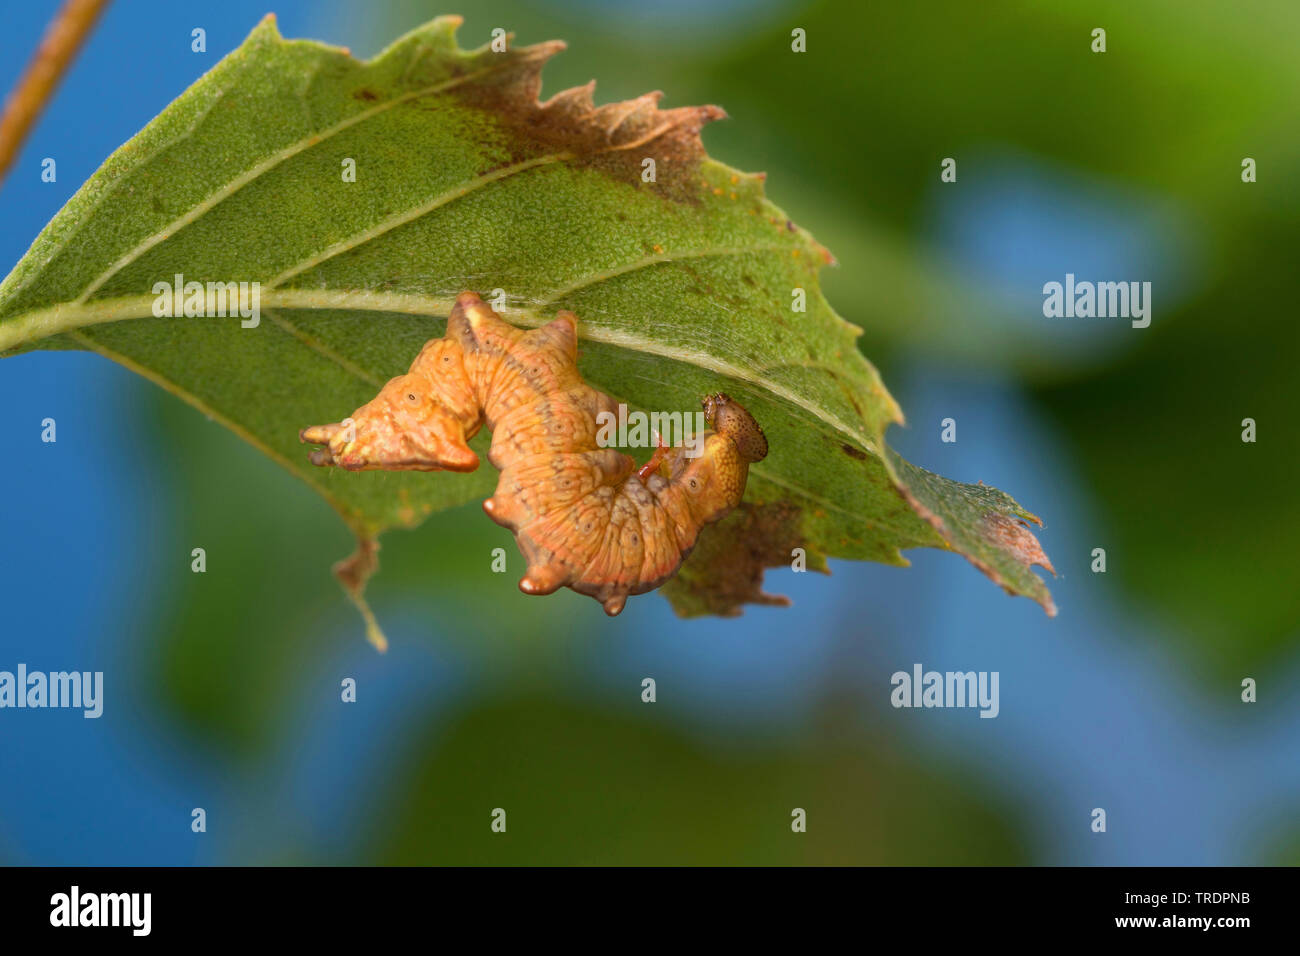 Bügeleisen prominente (Notodonta dromedarius), Caterpillar an eine Birke Blatt, Deutschland Stockfoto